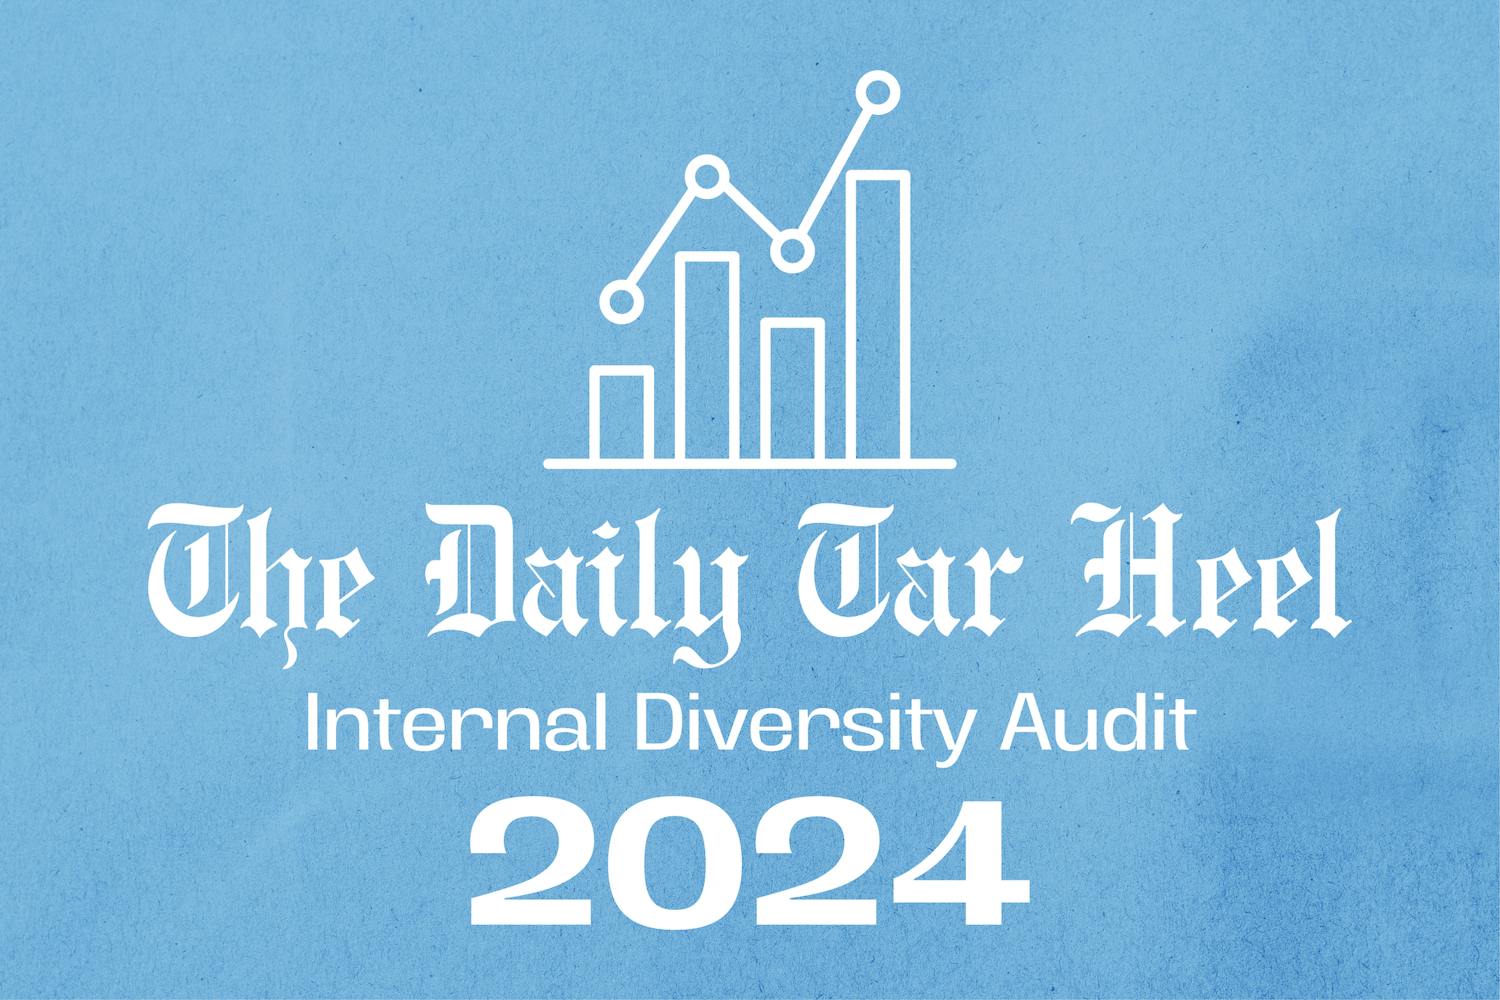 dth-internal-audit-2024.png